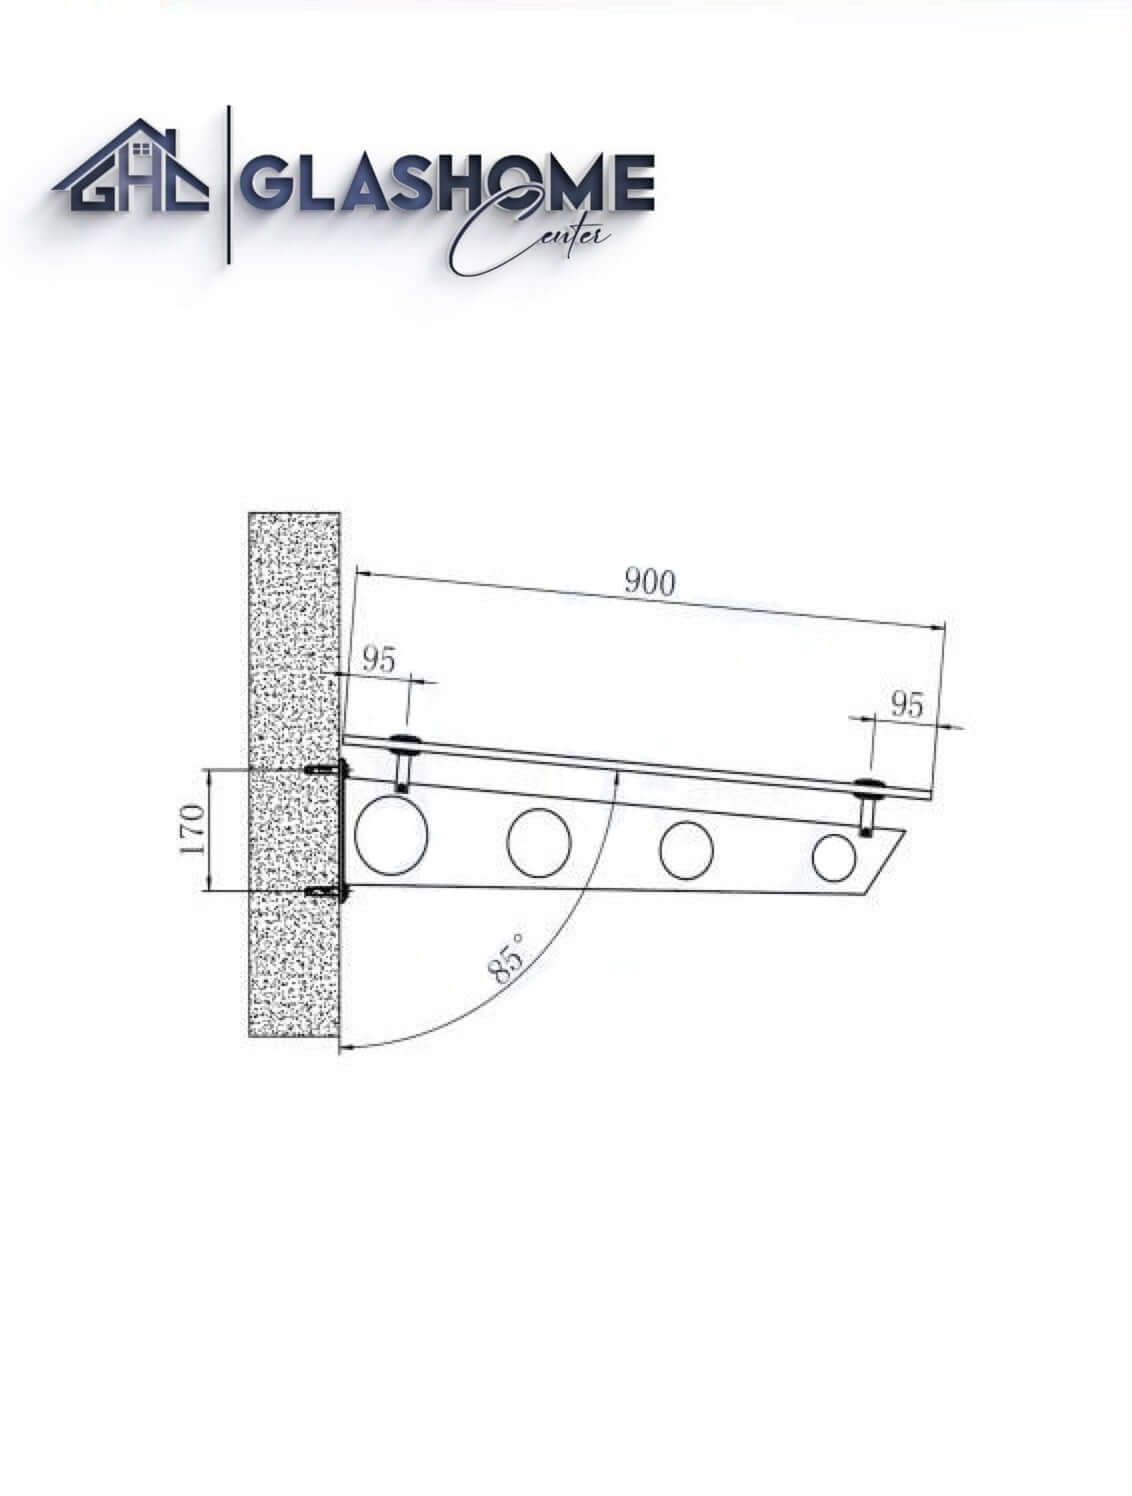 GlasHomeCenter - glass canopy - Clear glass - 180x90cm - 13.1mm VSG - incl. 2 Edelstahlhalterungen Variant "Stockholm"